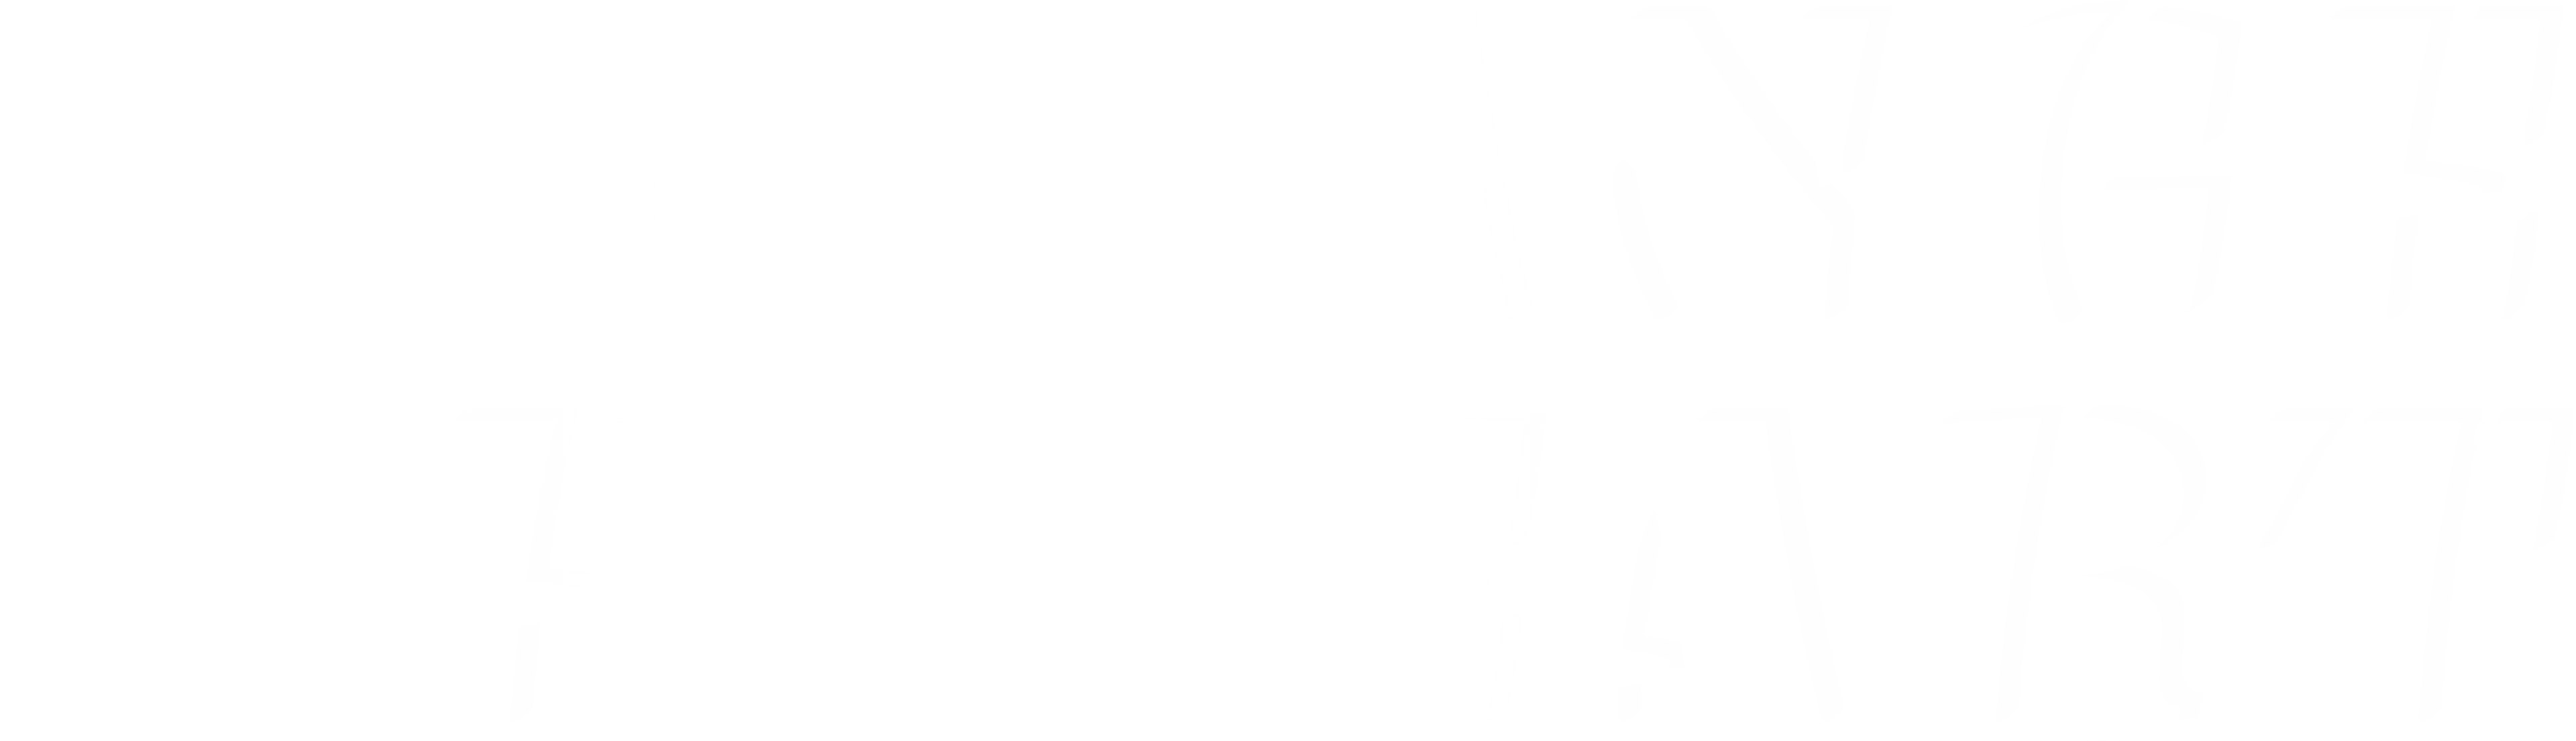 A Change of Heart logo